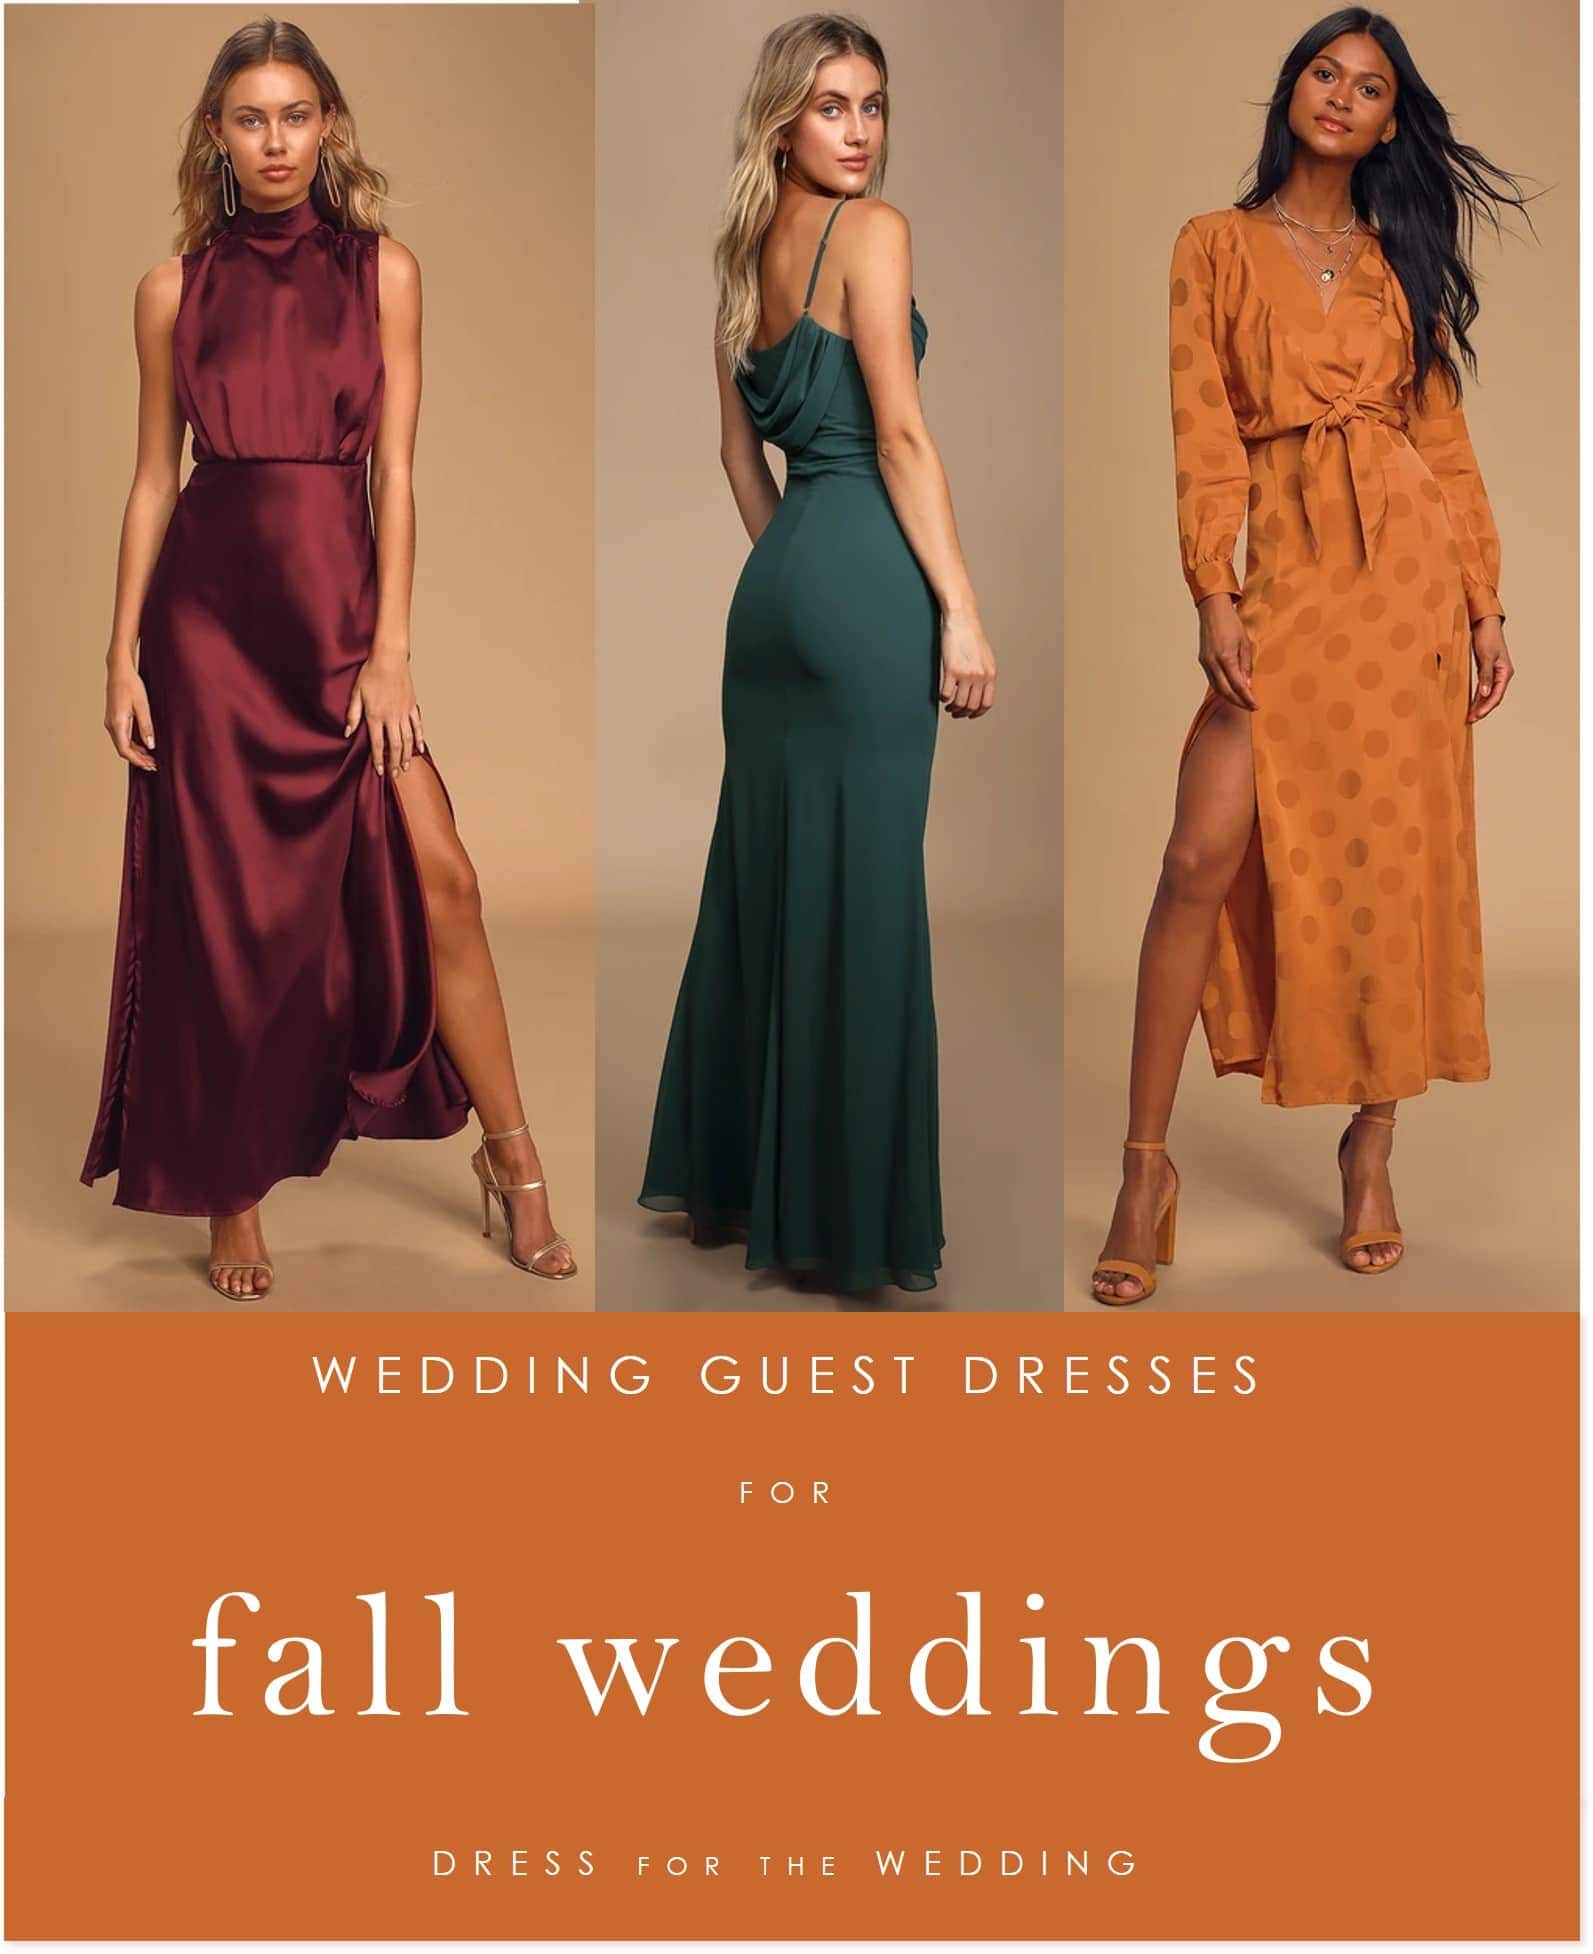 Accessorizing Maxi Dress for Fall Wedding